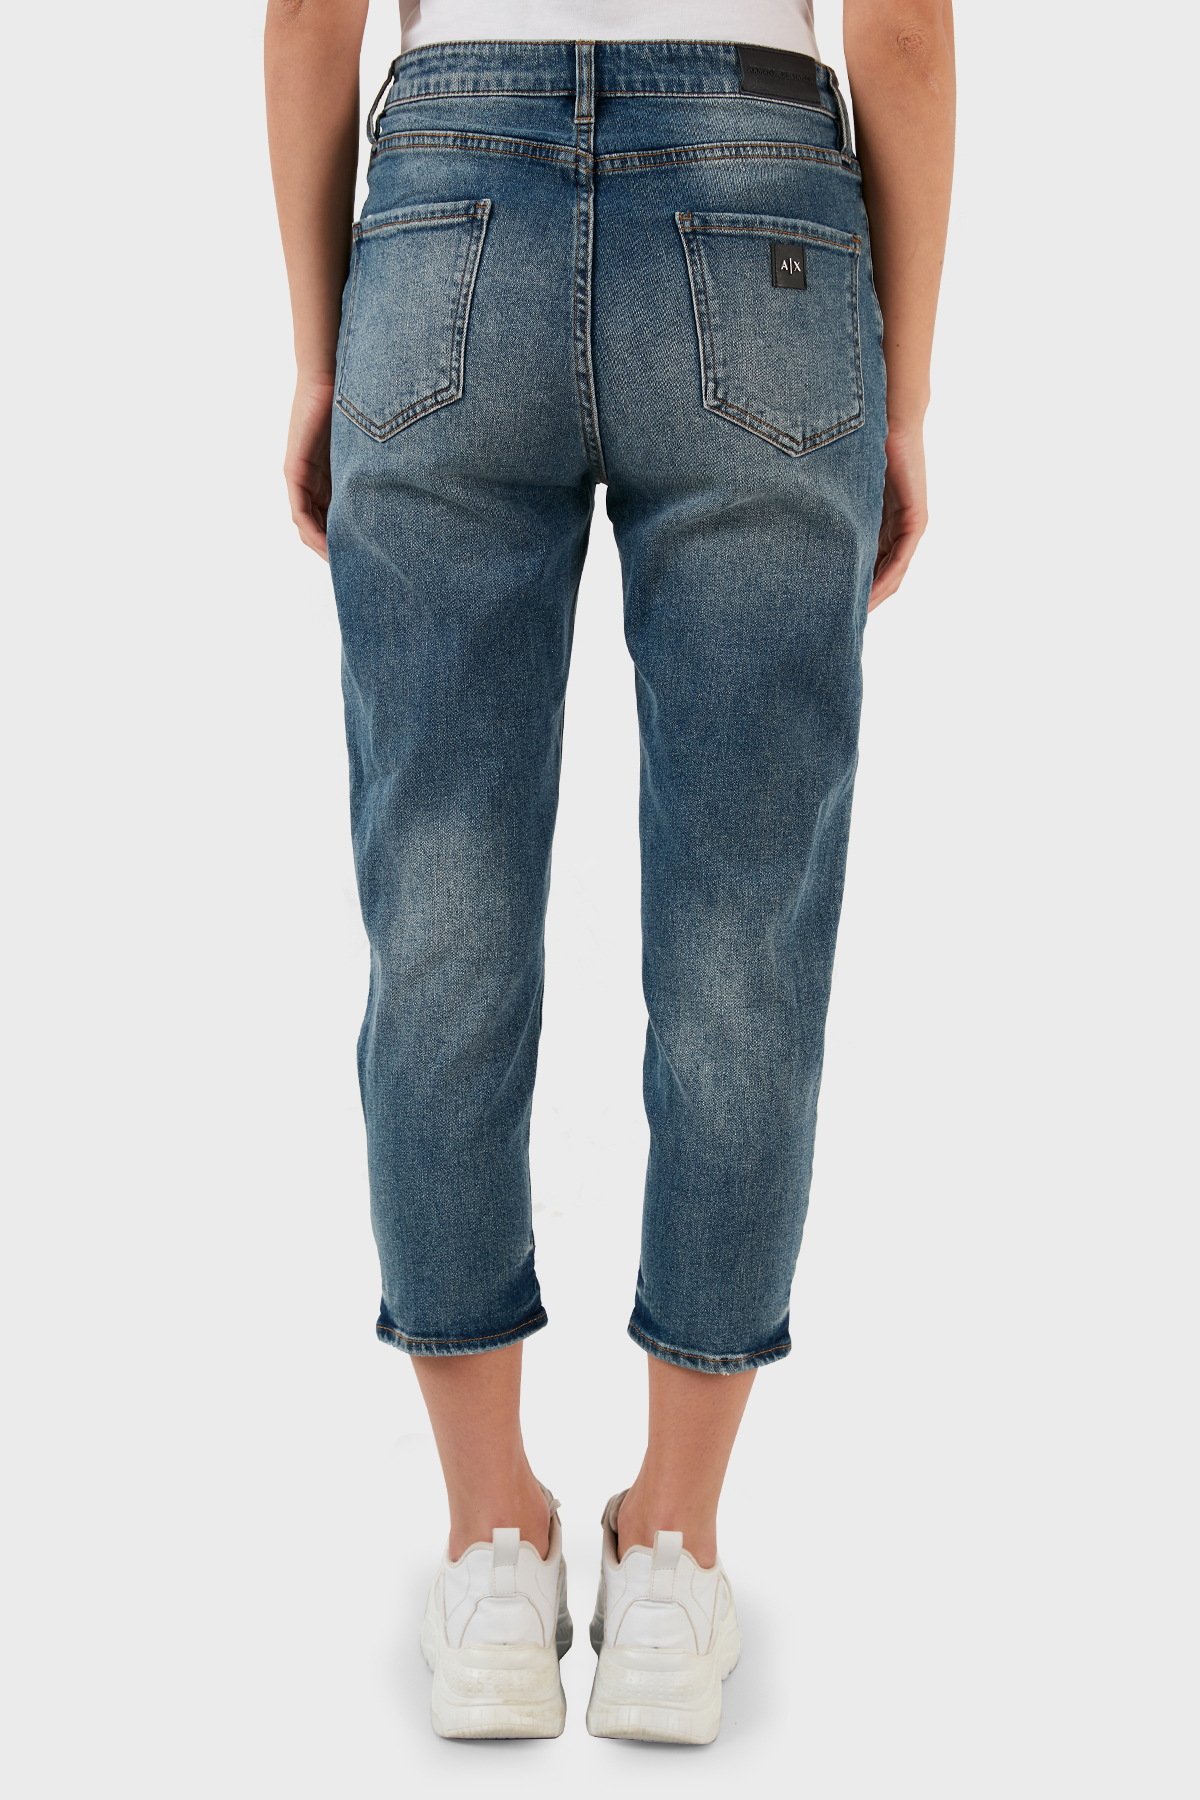 Armani Exchange J16 Pamuklu Yüksek Bel Kısa Paça Jeans Bayan Kot Pantolon 6LYJ16 Y1HPZ 1500 AÇIK MAVİ